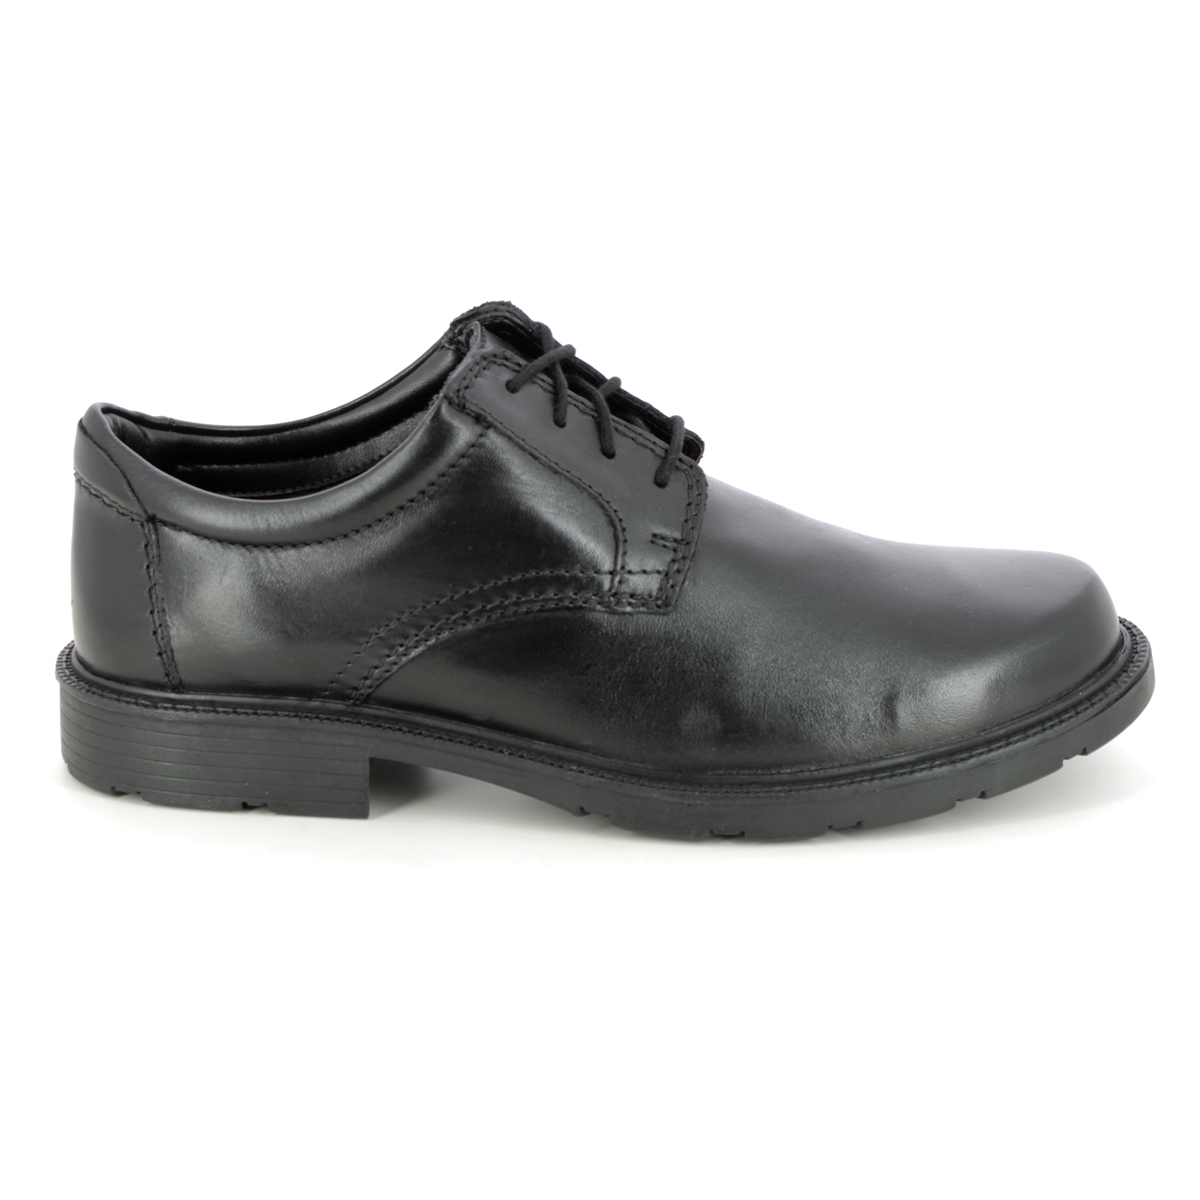 Clarks Kerton Lace Black leather Mens formal shoes 6560-57G